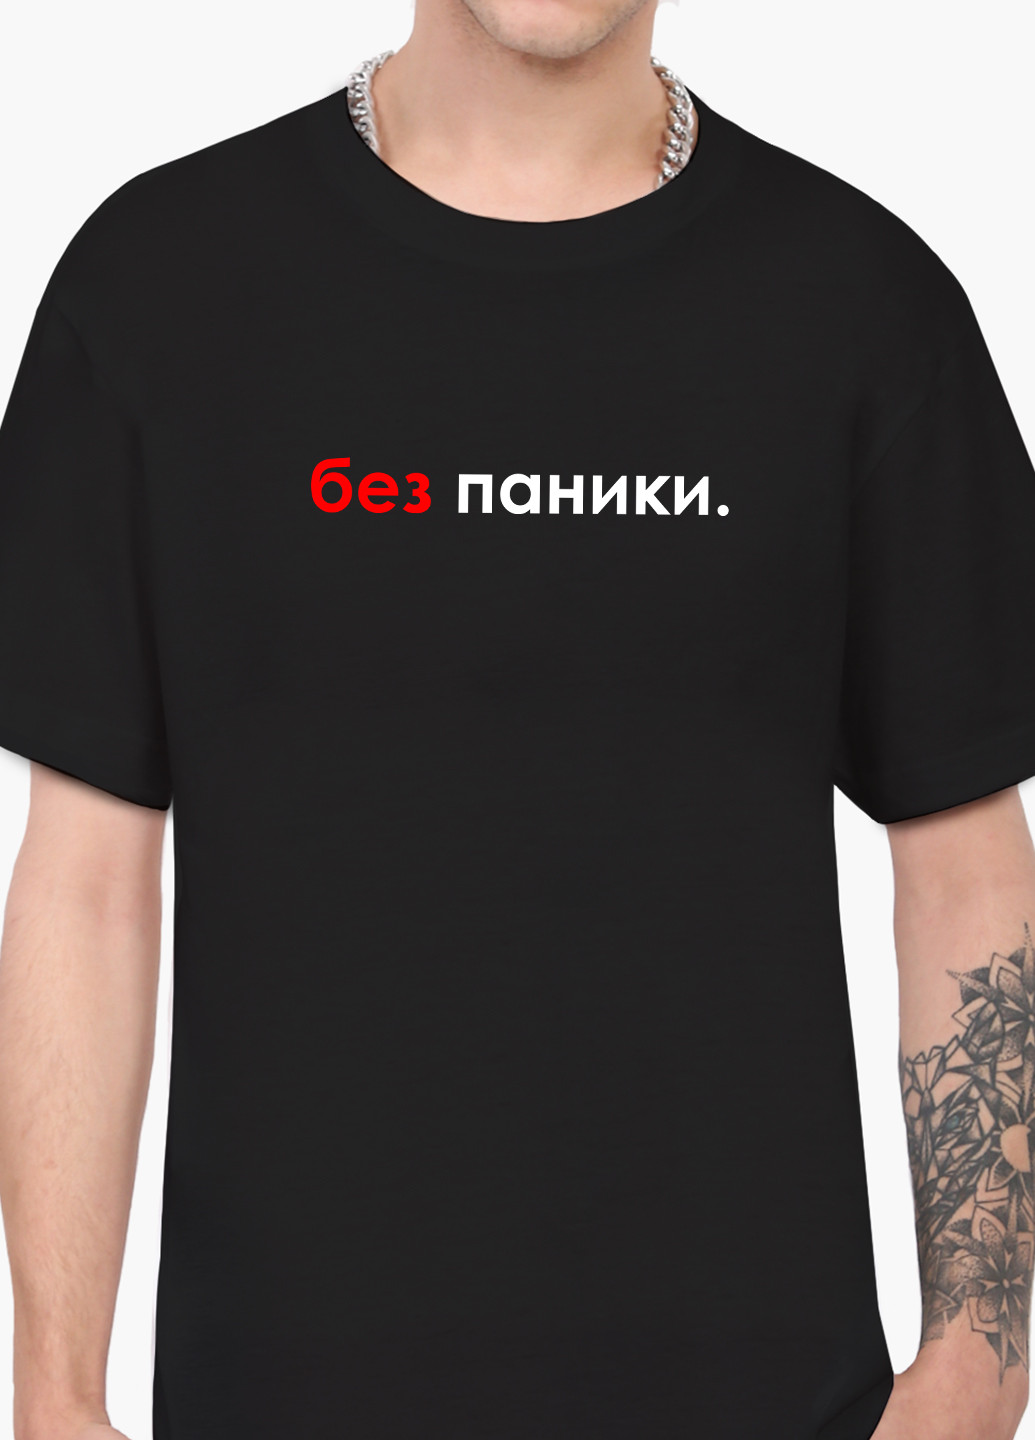 Черная футболка мужская надпись без паники (9223-1460-1) xxl MobiPrint